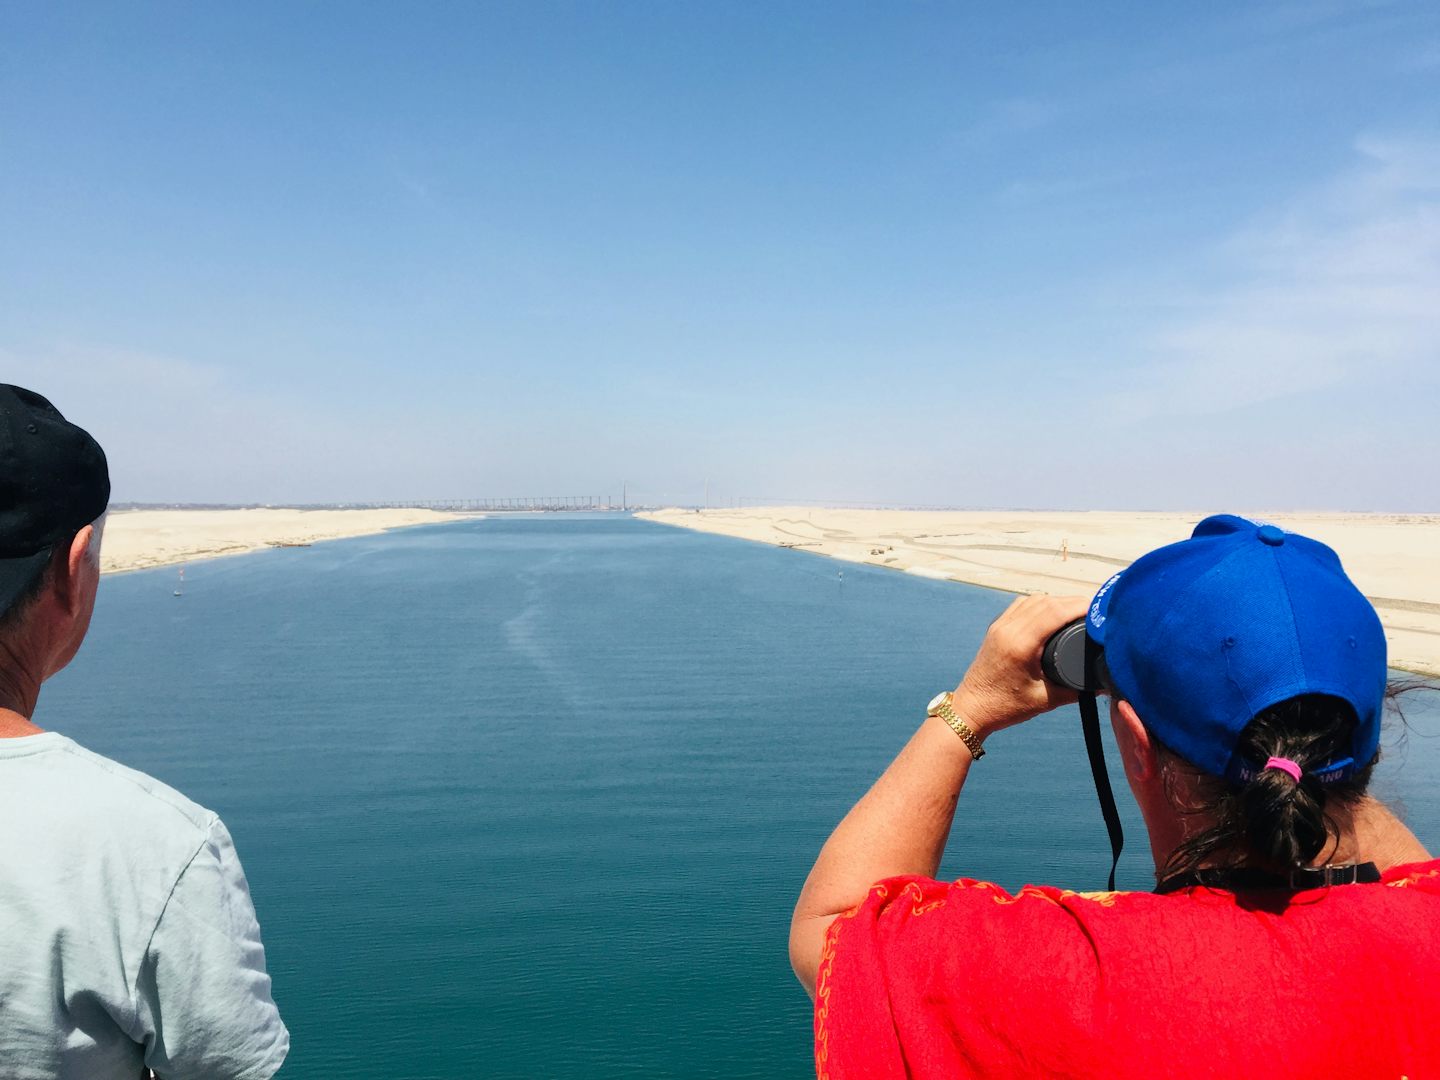 Going through the Suez Canal